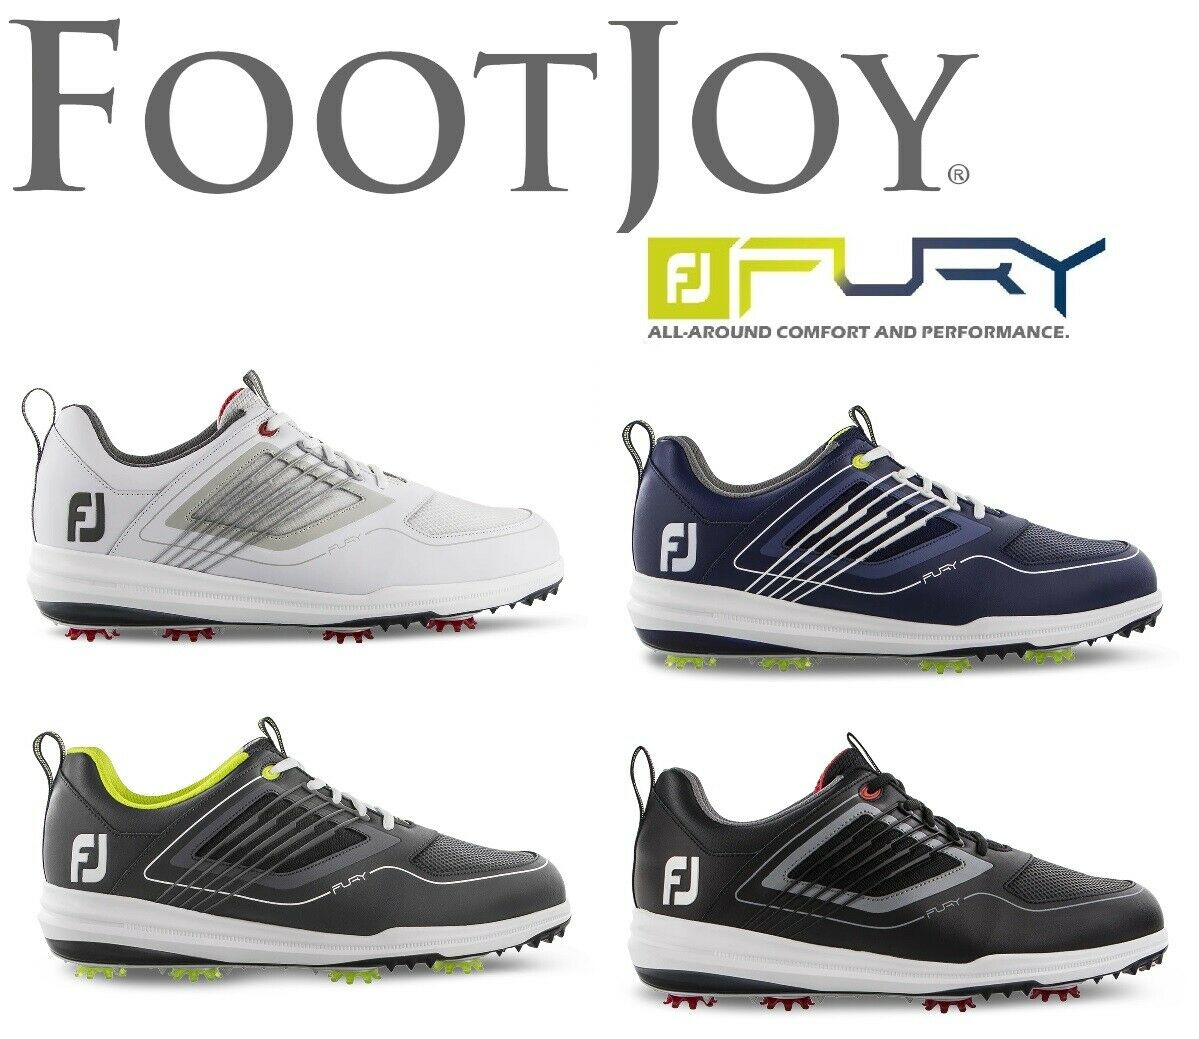 New Footjoy Mens Fury Golf Shoes Nib! - Choose Color & Size...